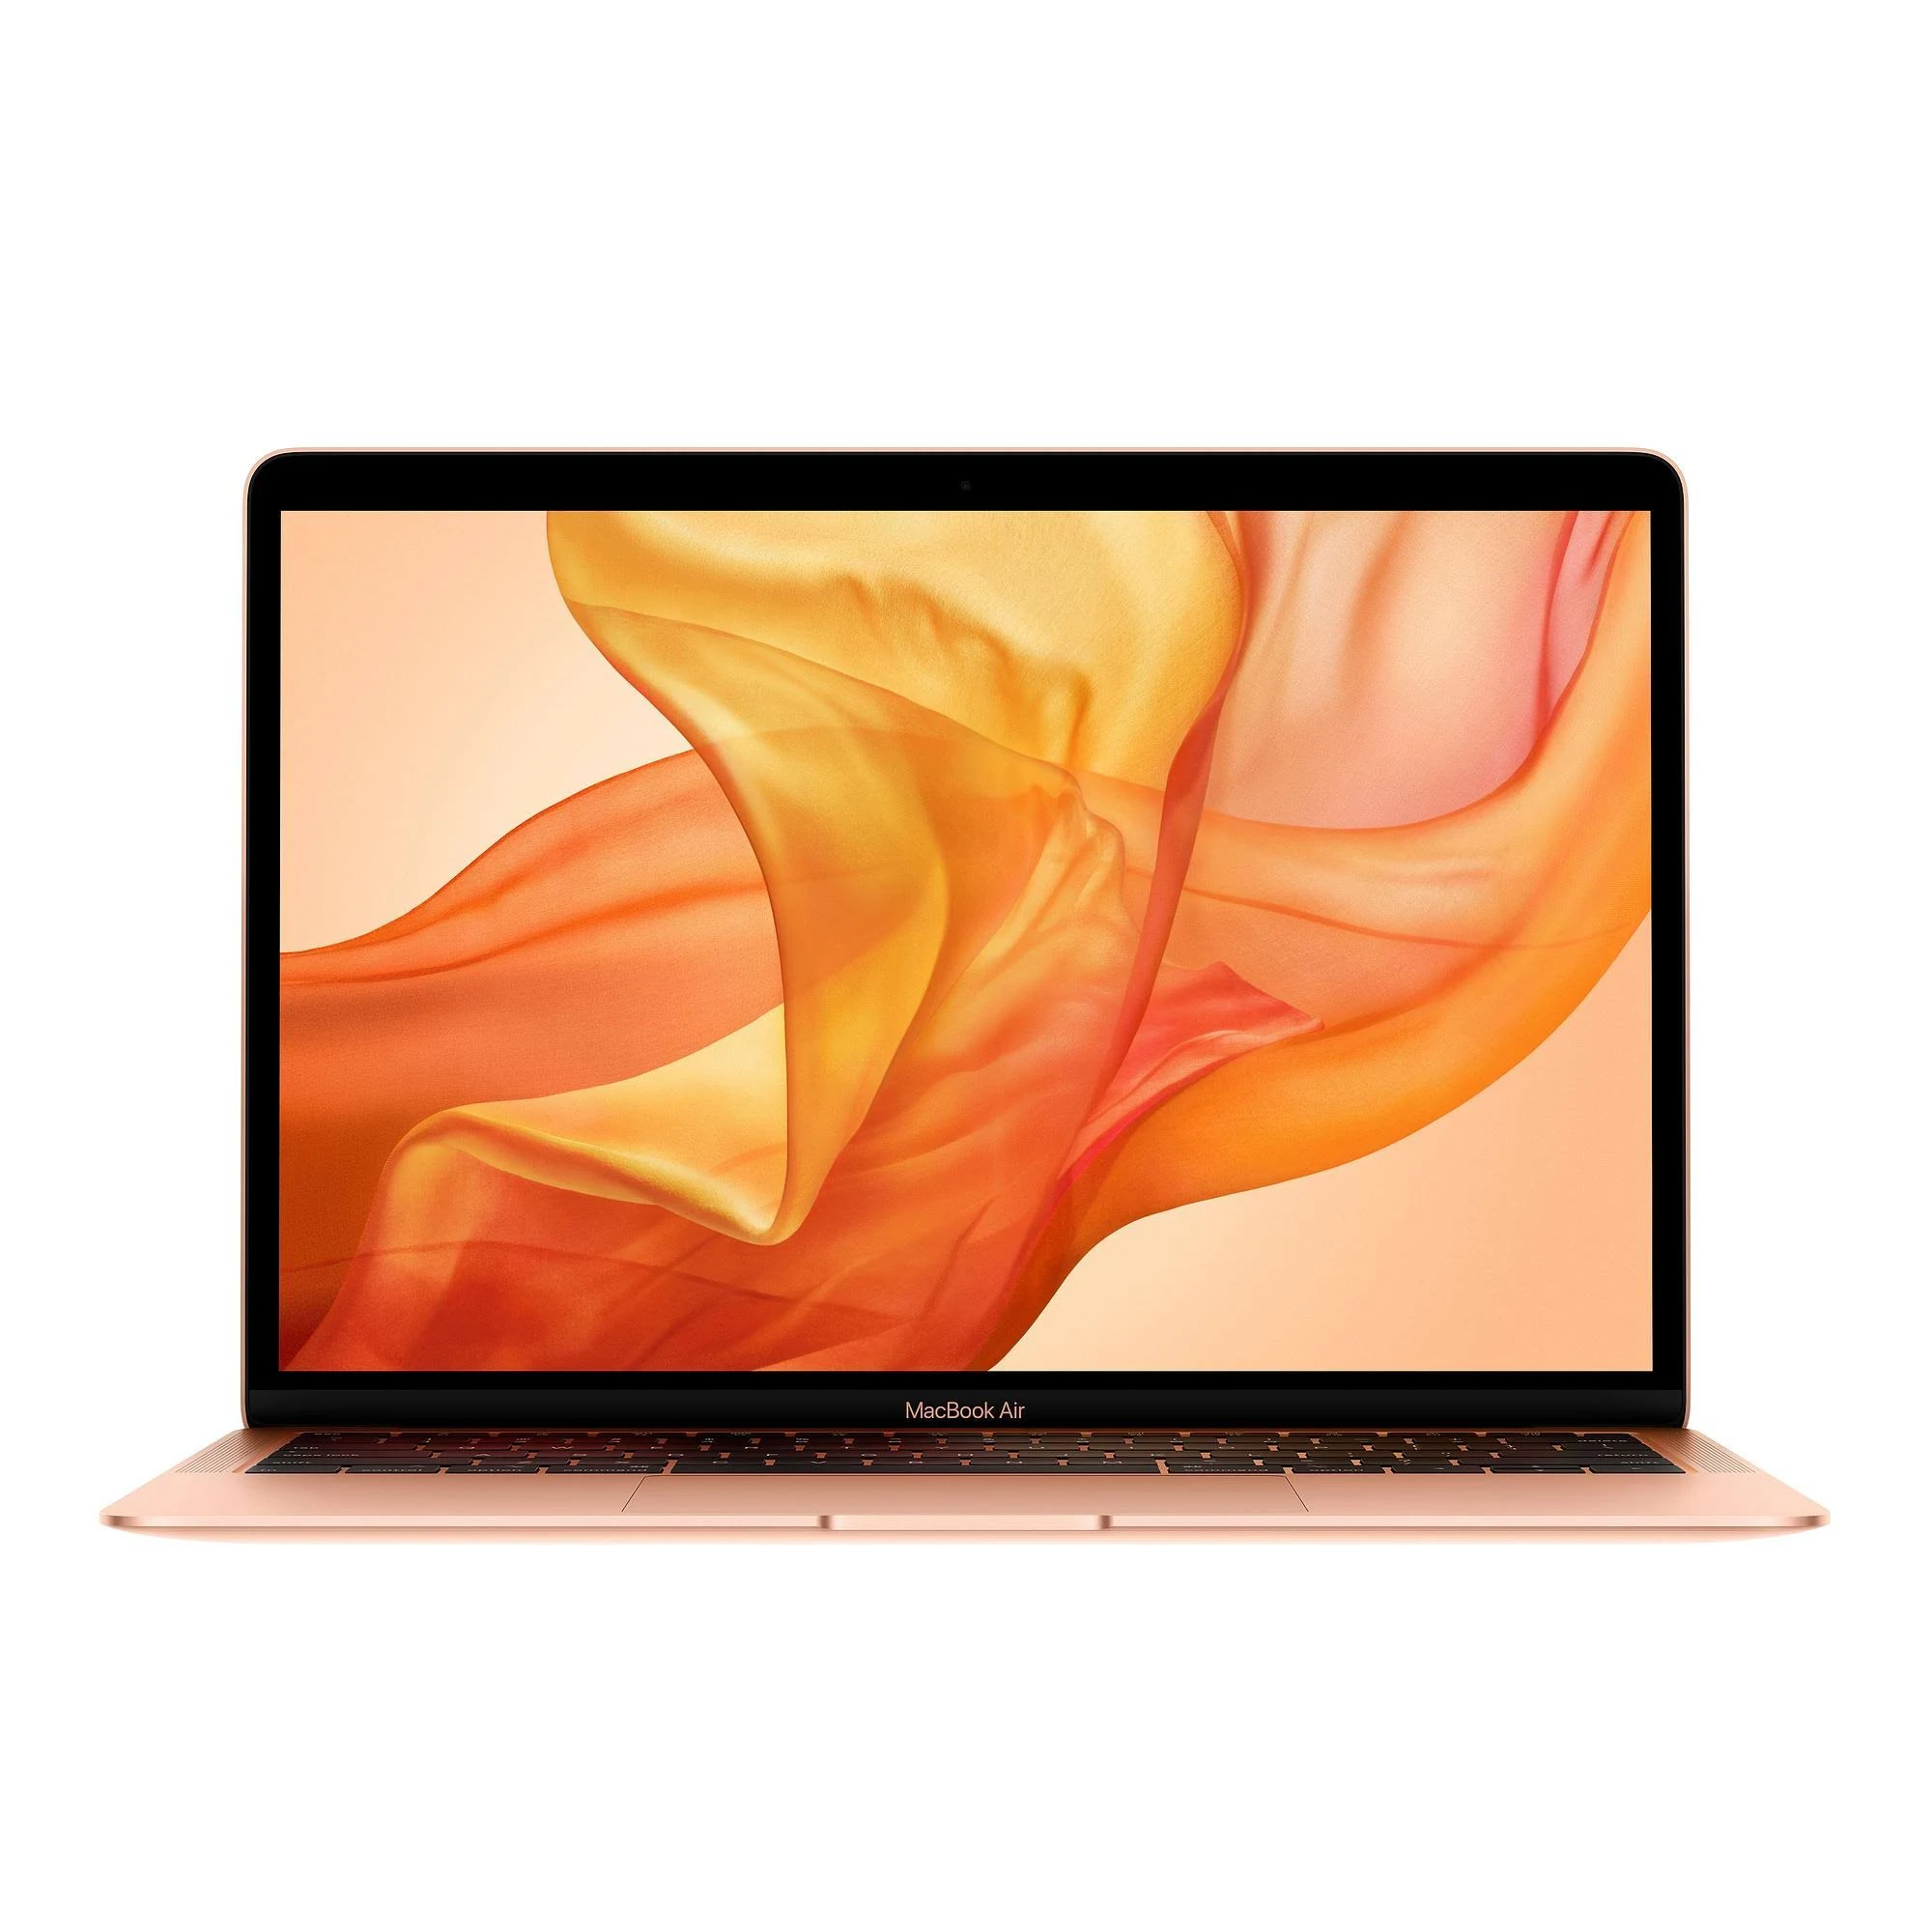 MacBook Air 13 inch True Tone 2019 i5 1.6GHz - 512GB SSD - 8GB Ram 512GB Space Grey Pristine